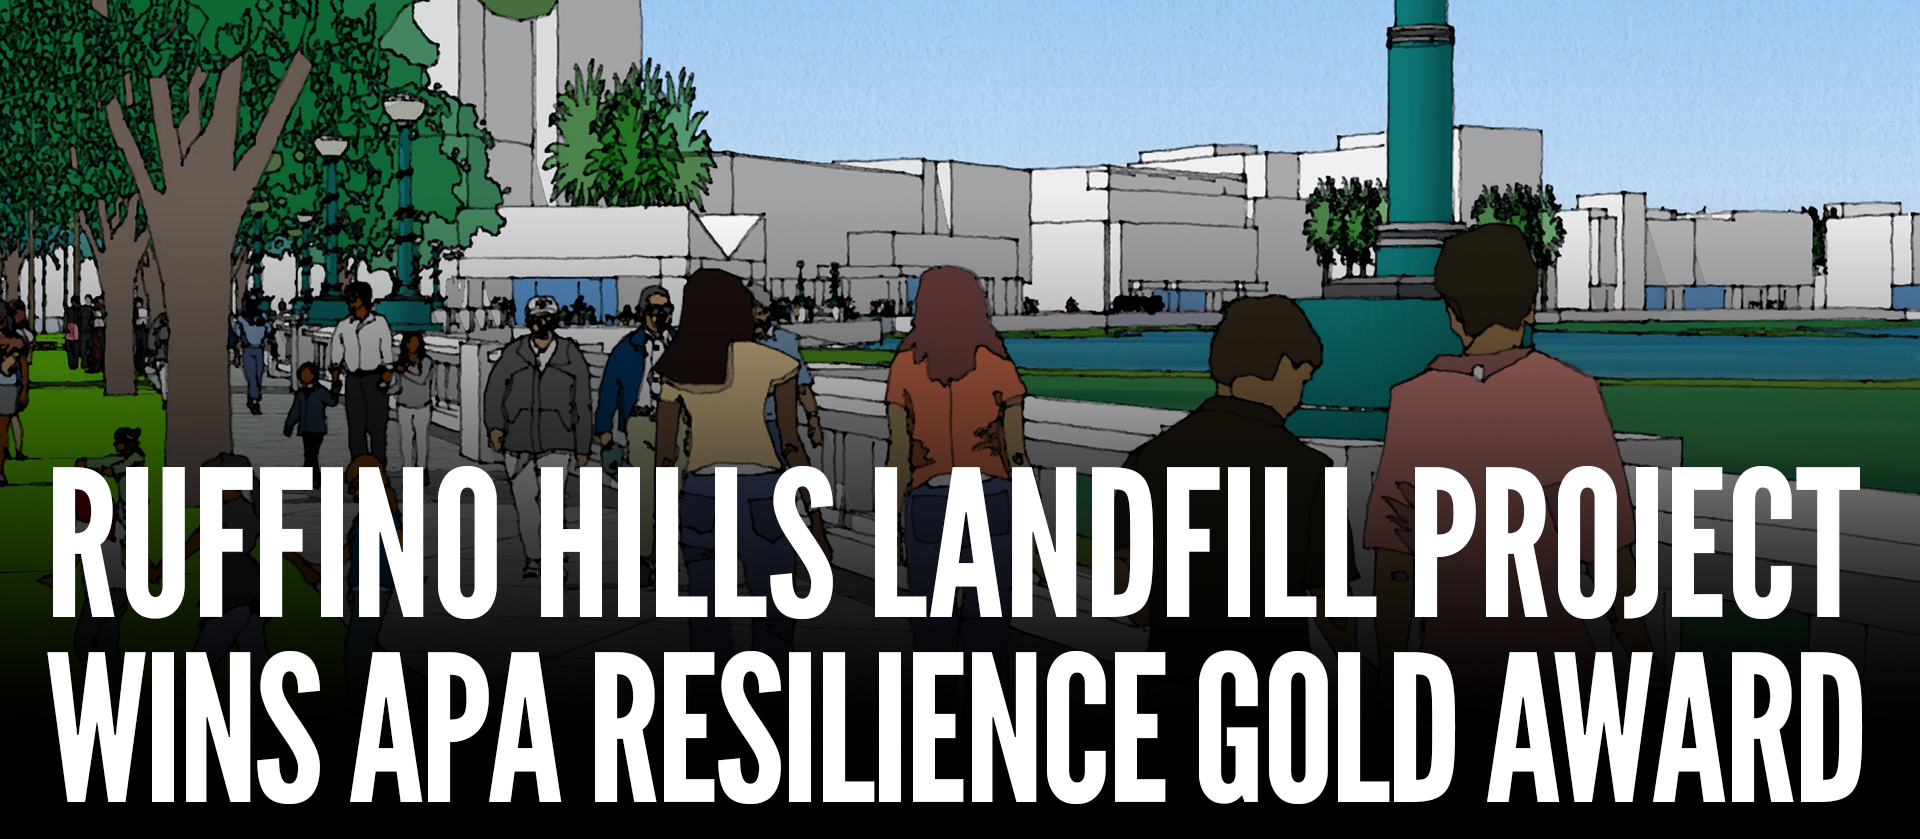 Ruffino Hills Landfill Project Wins APA Resilience Gold Award